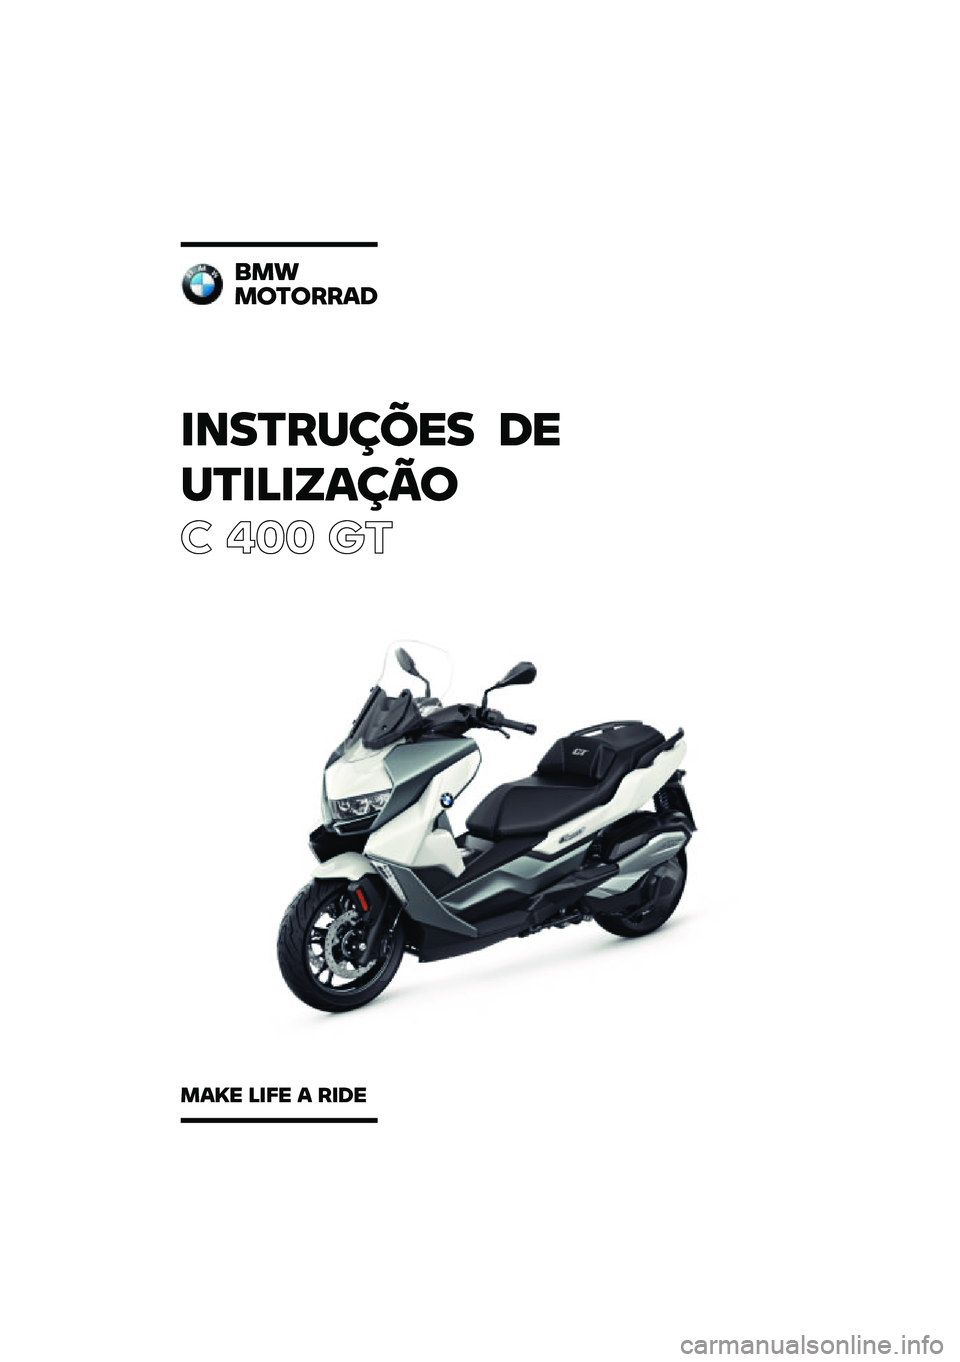 BMW MOTORRAD C 400 GT 2020  Manual do condutor (in Portuguese) �������\b�	�\f� �
�\f
��������\b��

� ��� ��\b
���
��
��
����
����\f ����\f � ���
�\f 